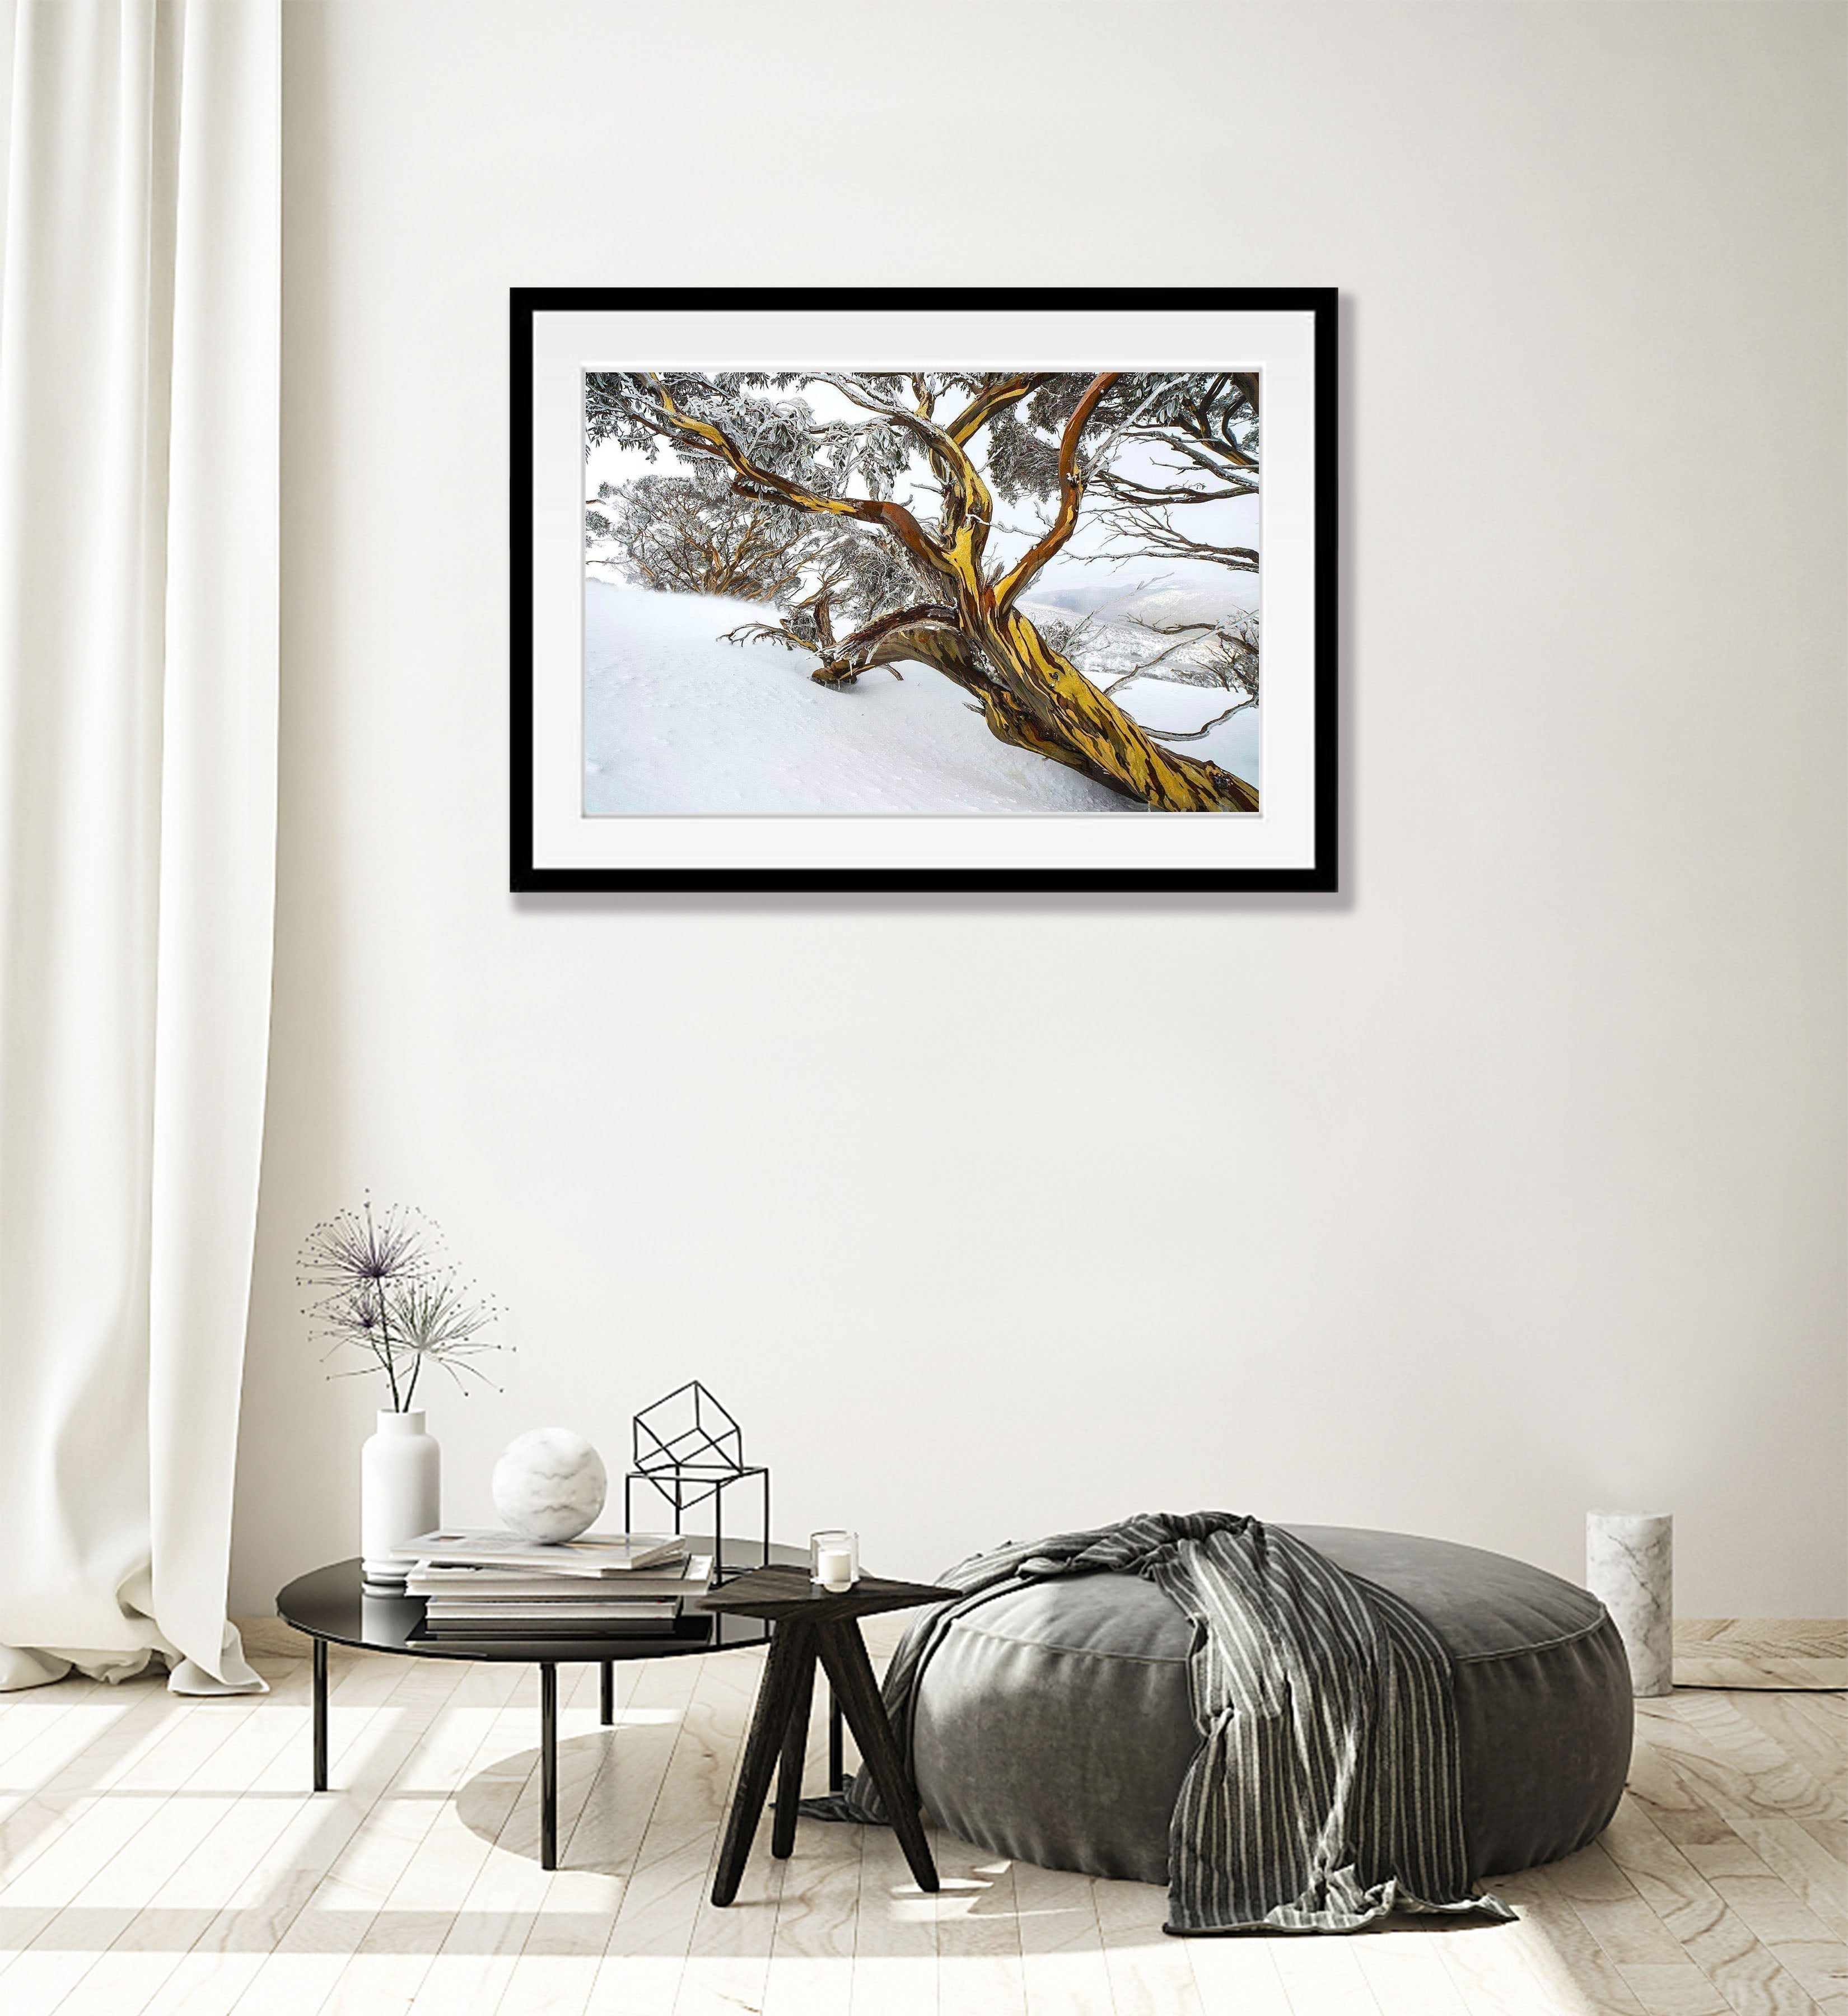 ARTWORK INSTOCK - Snow Gum, Dead Horse Gap, Snowy Mountains NSW - 150 x 100cms Canvas Raw Oak Print